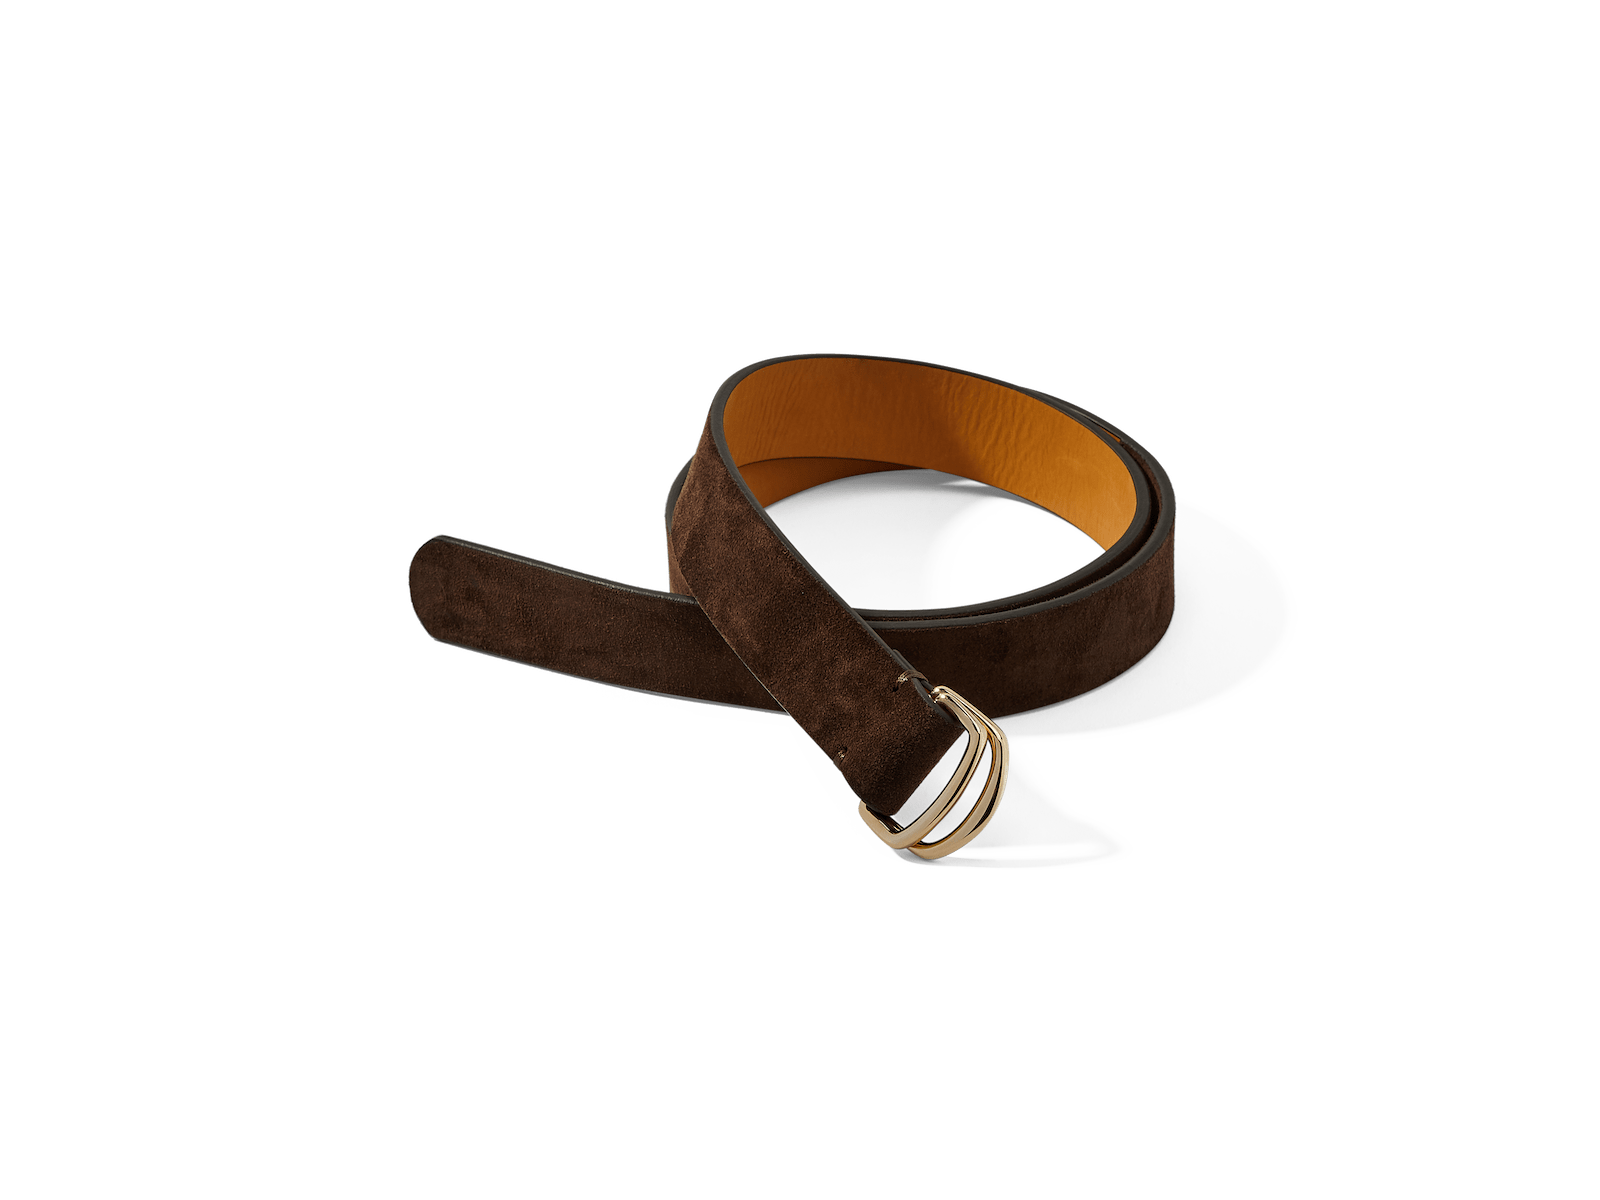 Baudoin & Lange  Men's Sagan Belt in Dark Brown Suede with Gold Rings